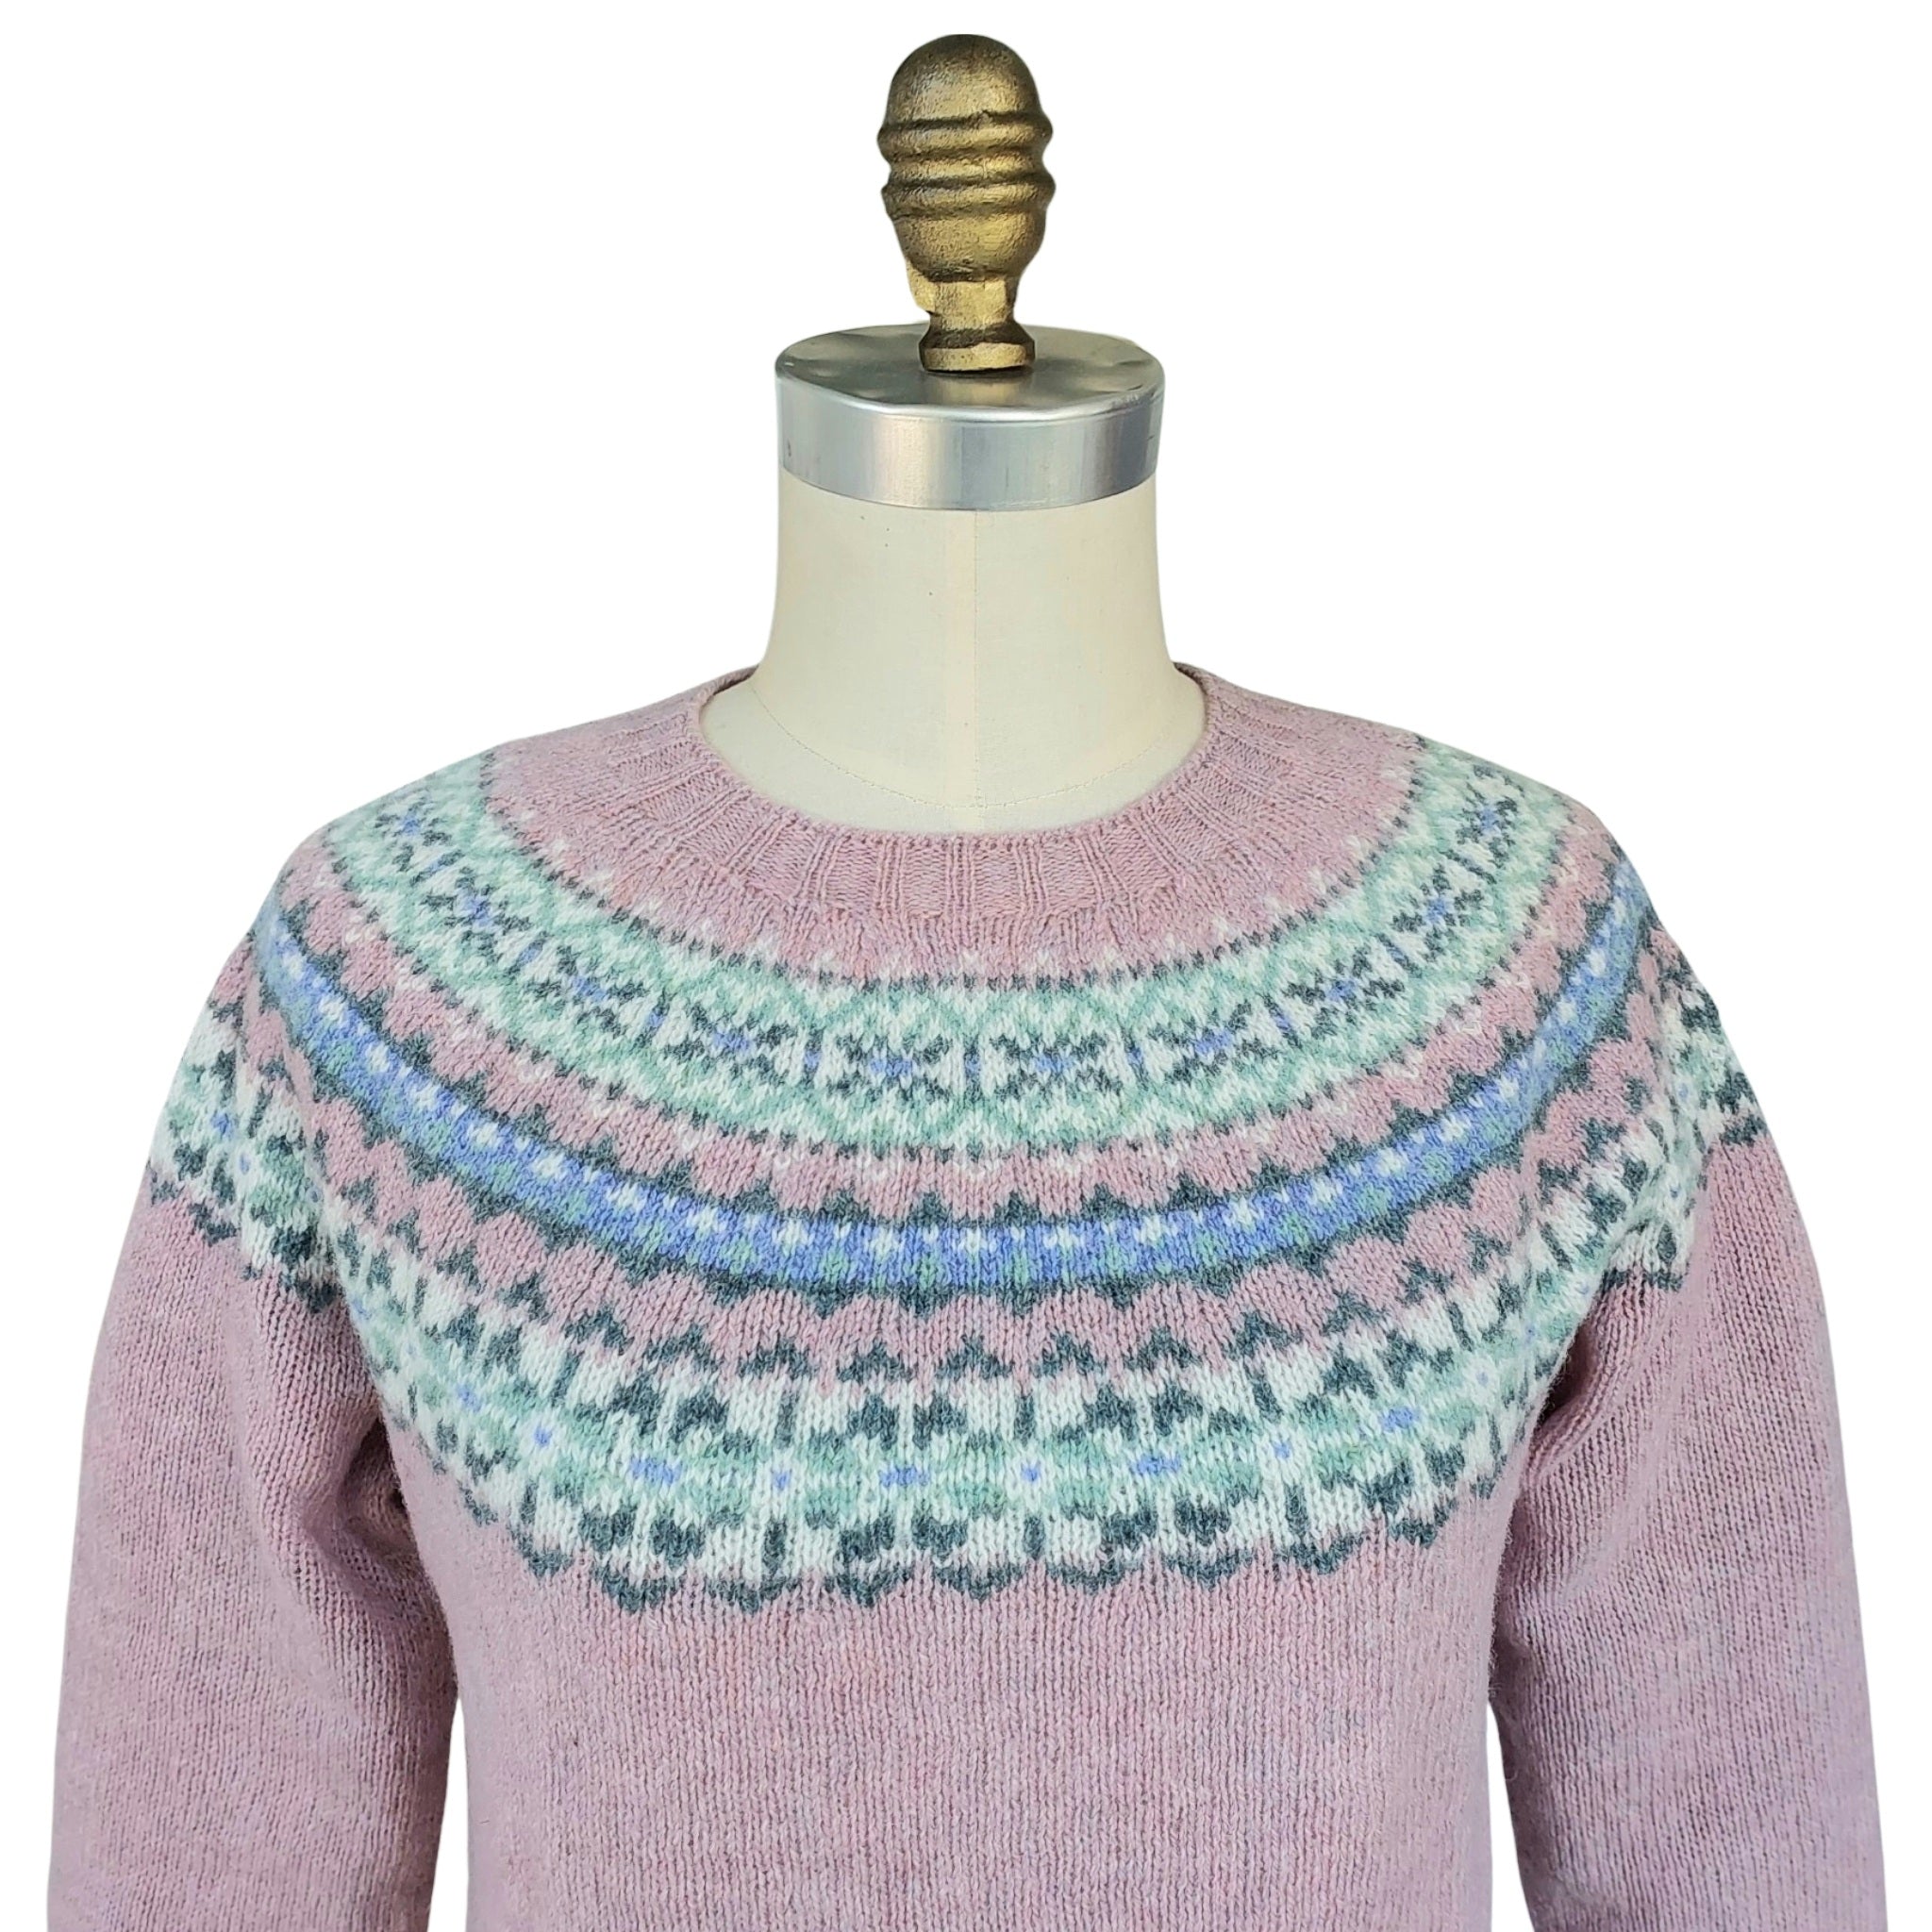 Harley of Scotland Shetland Wool Knit Fairisle Yoke Sweater